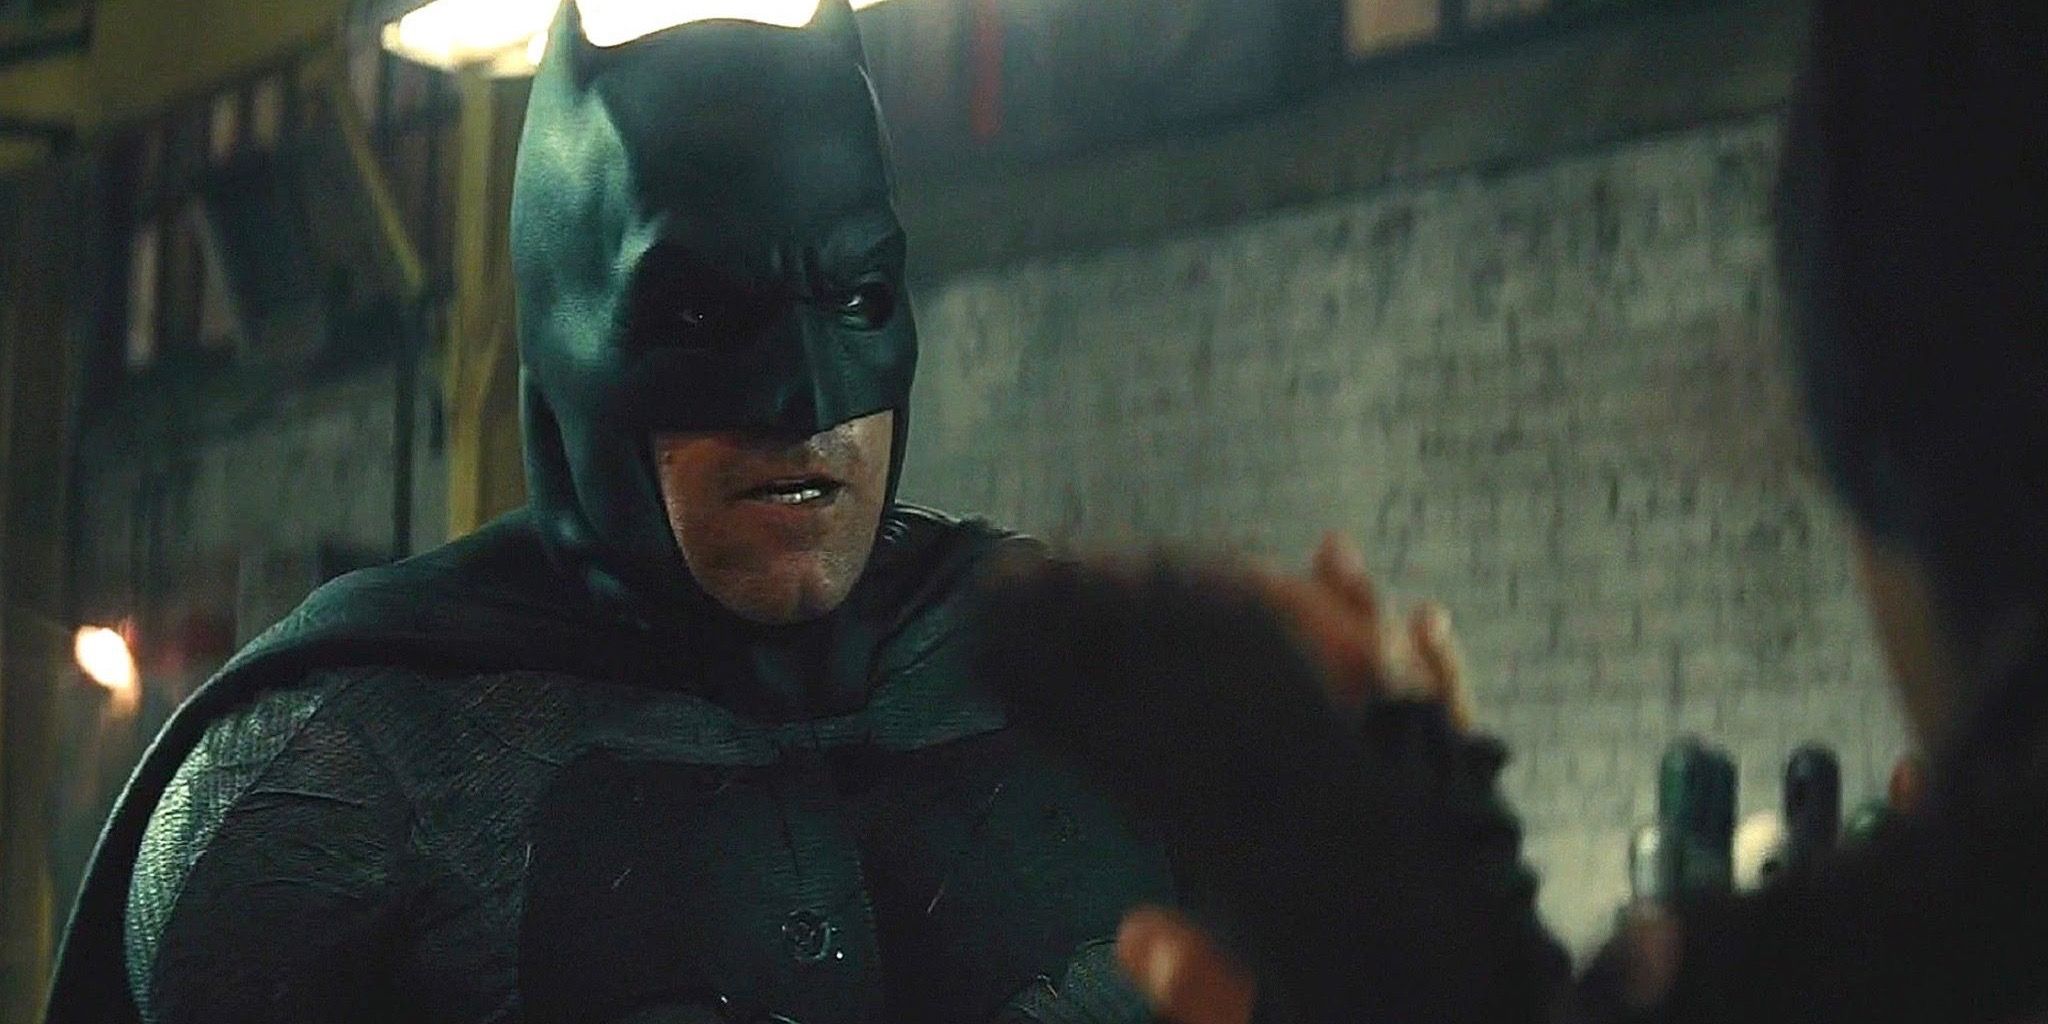 Batman preparing to fight in the warehouse in Batman v Superman